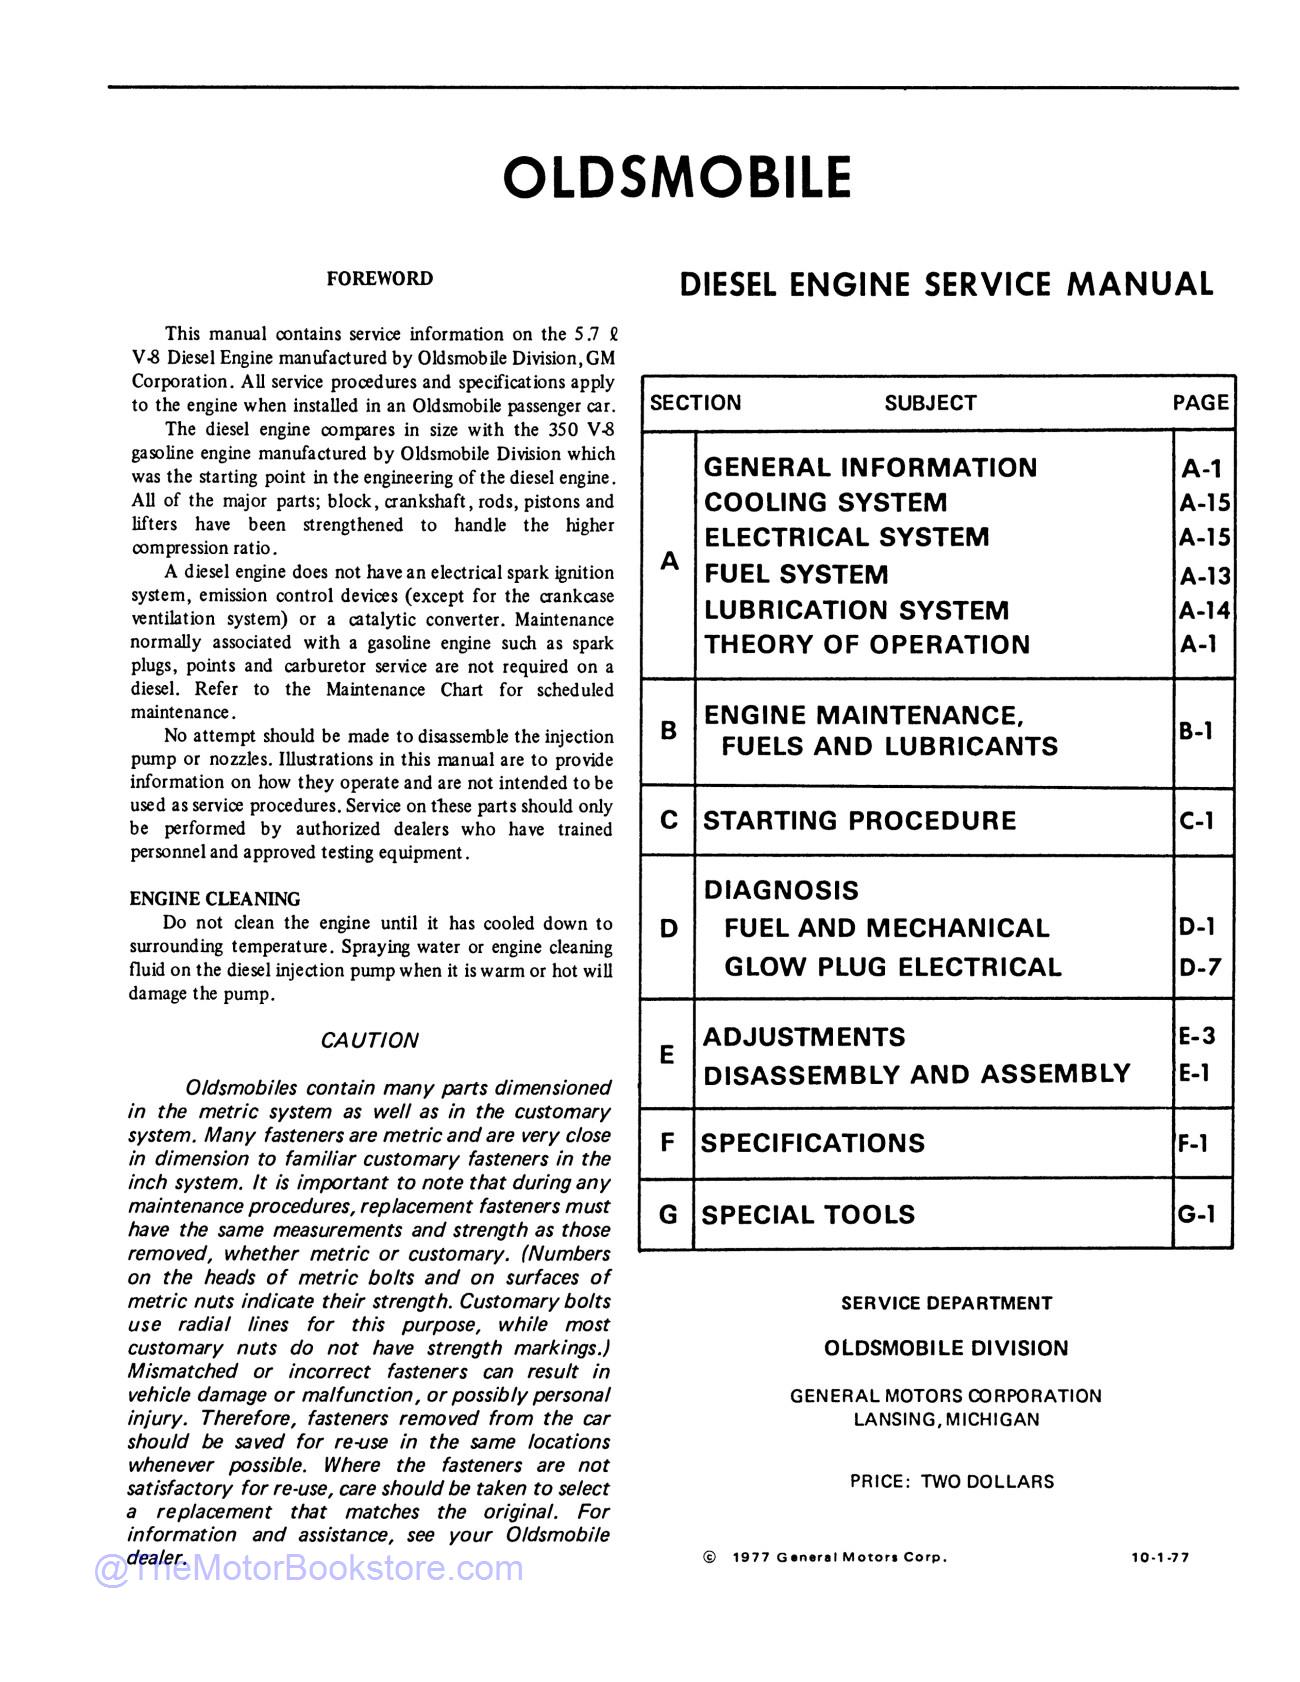 1978 Oldsmobile 5.7L Diesel Engine Service Repair Manual  - Table of Contents